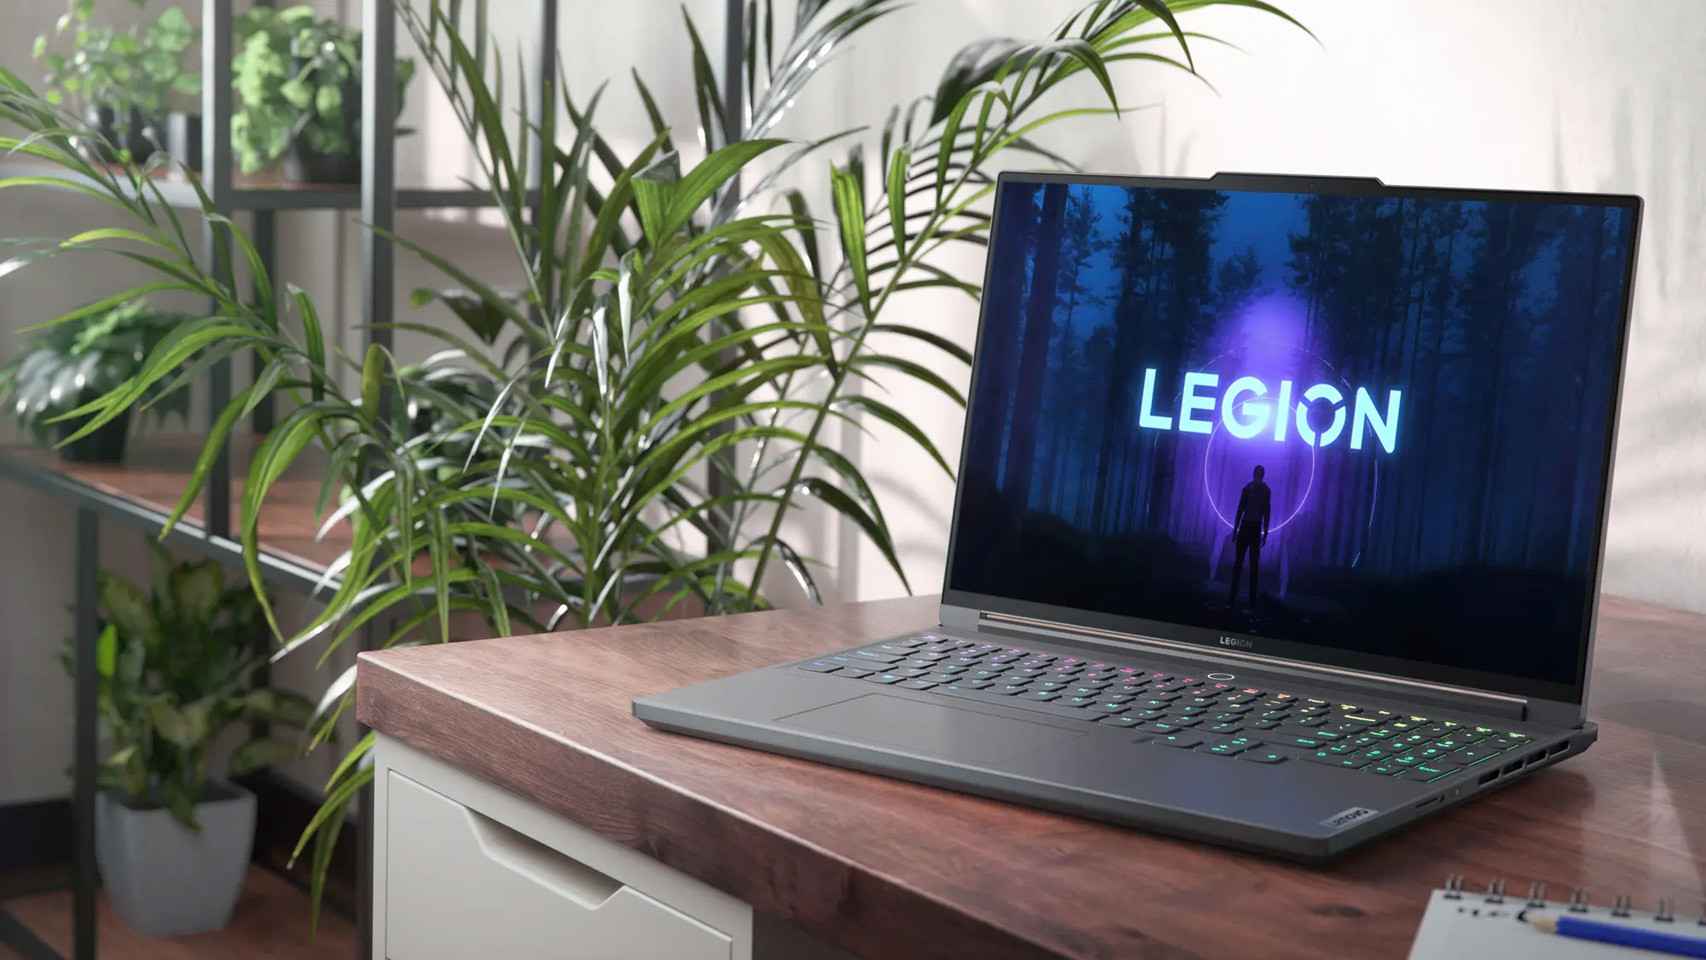 Lenovo Yoga Legion.